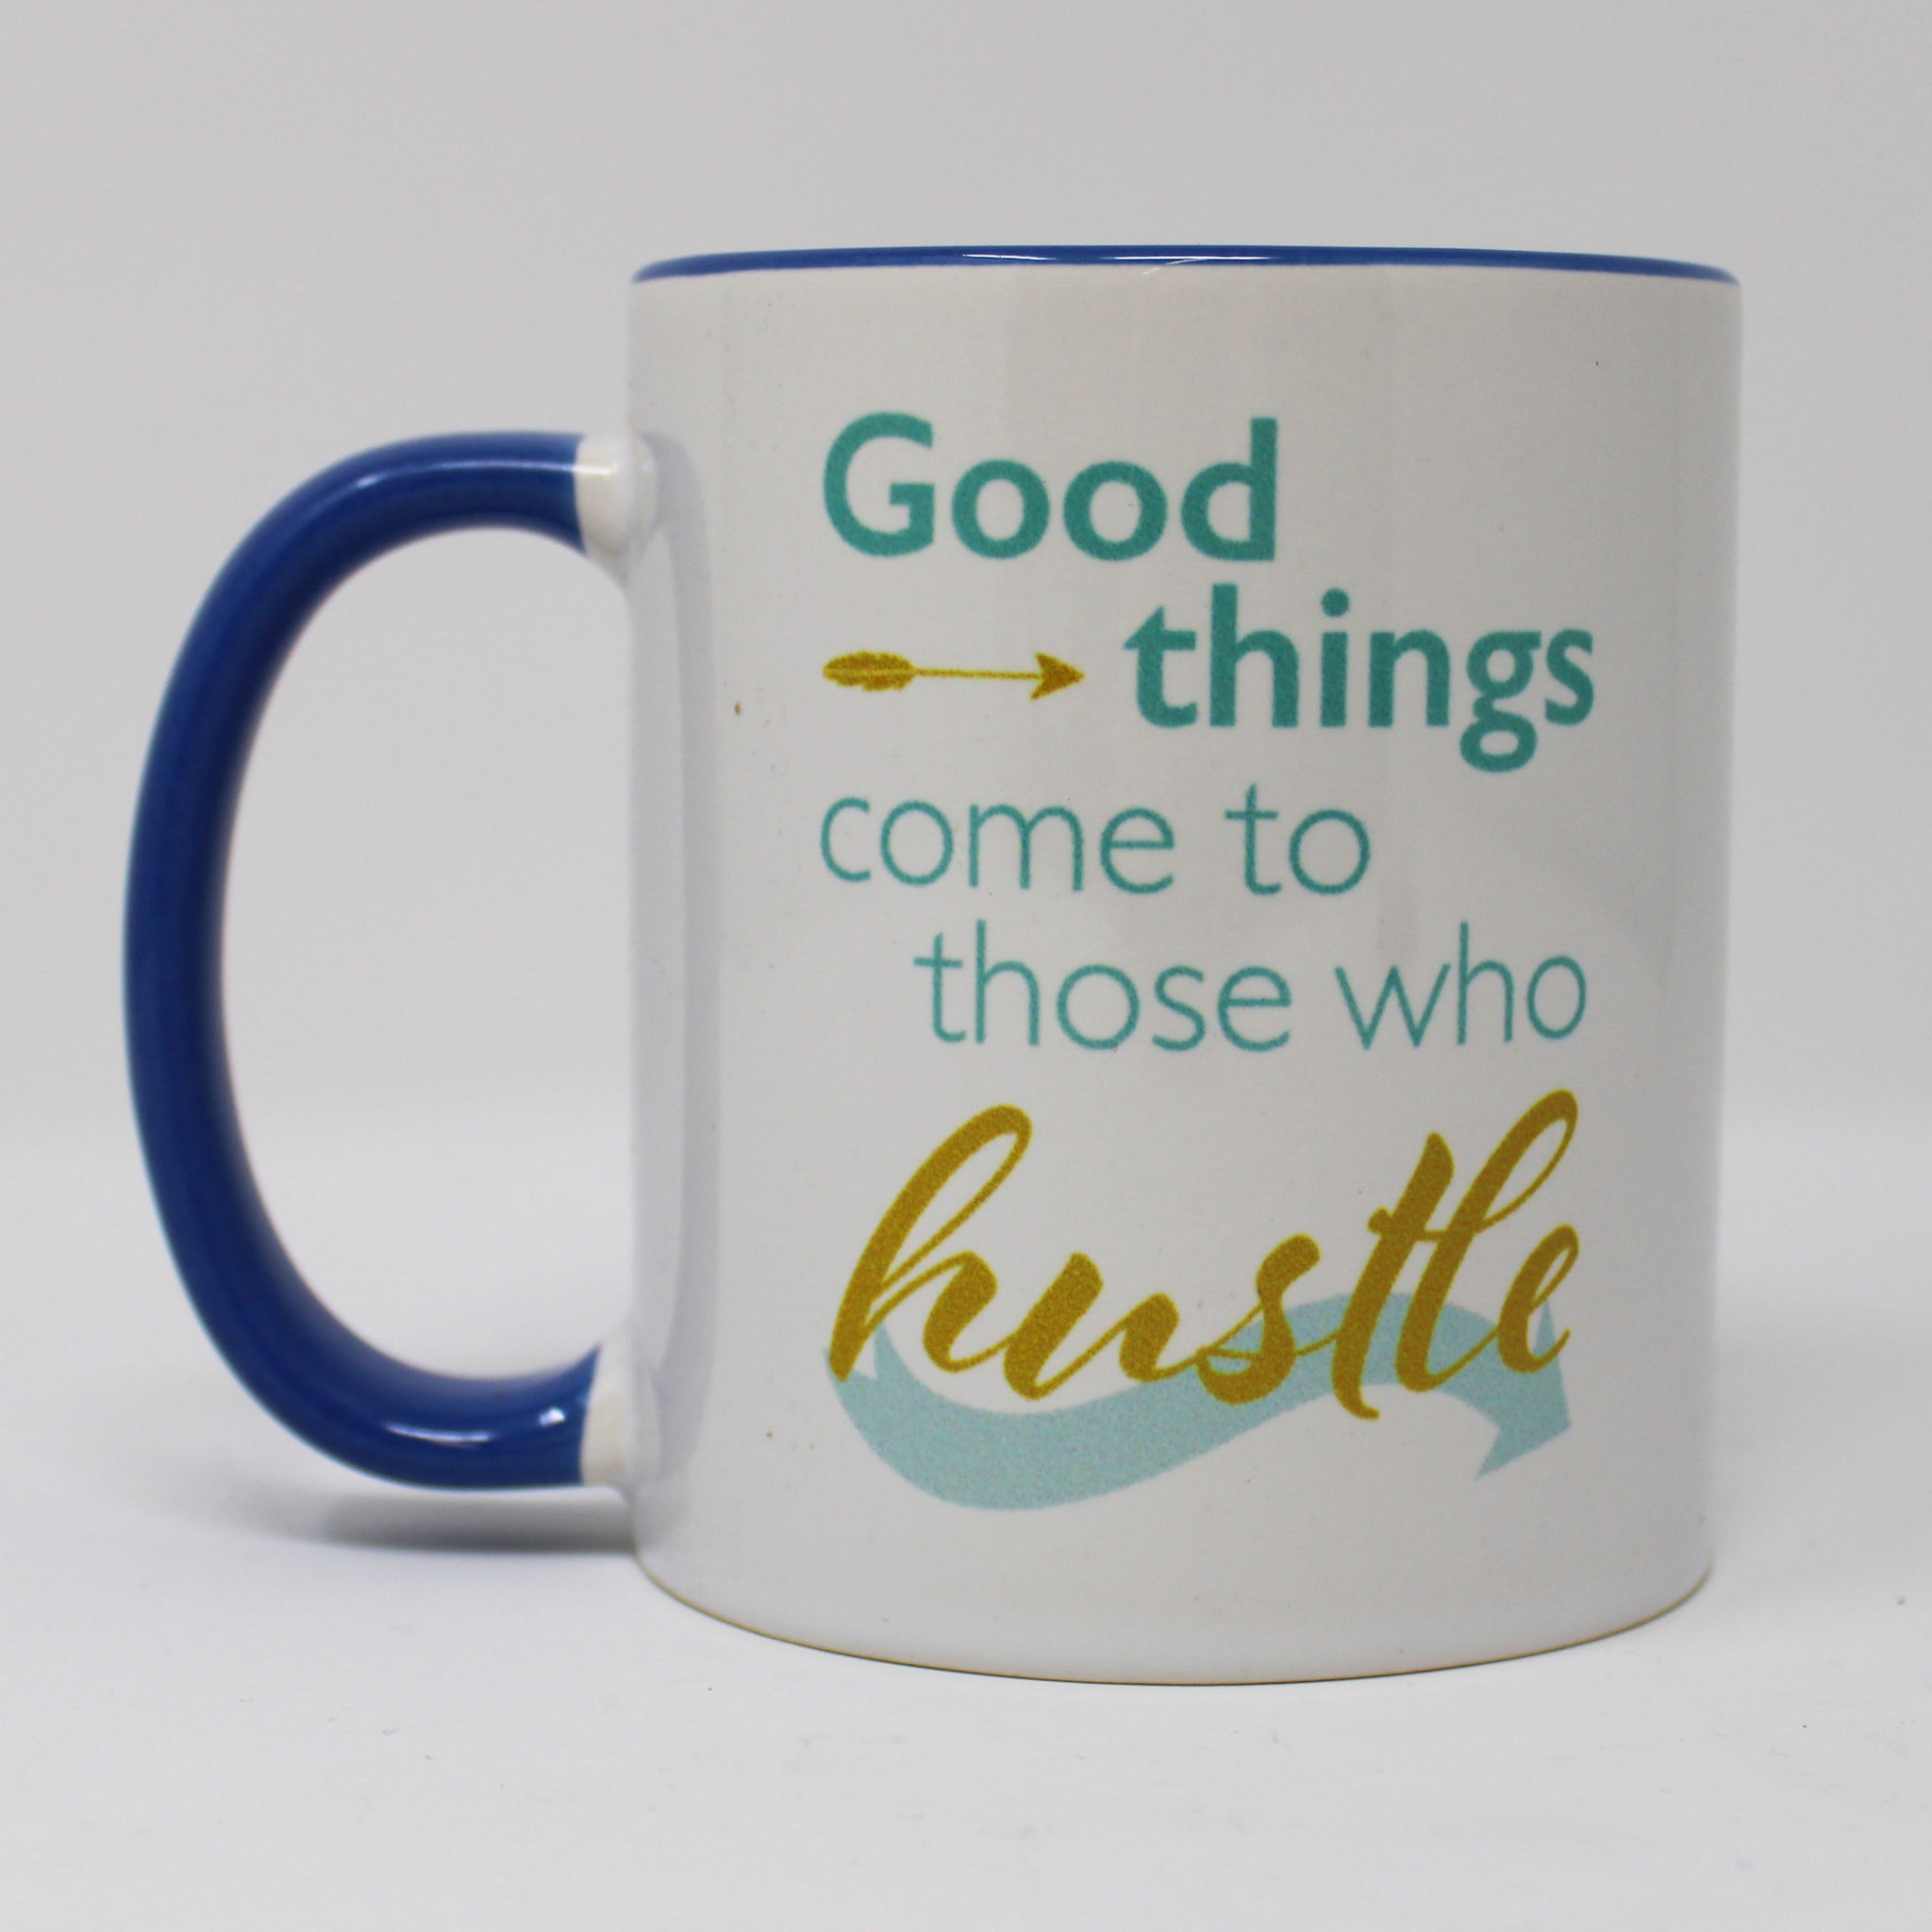 Hustle motivational mug